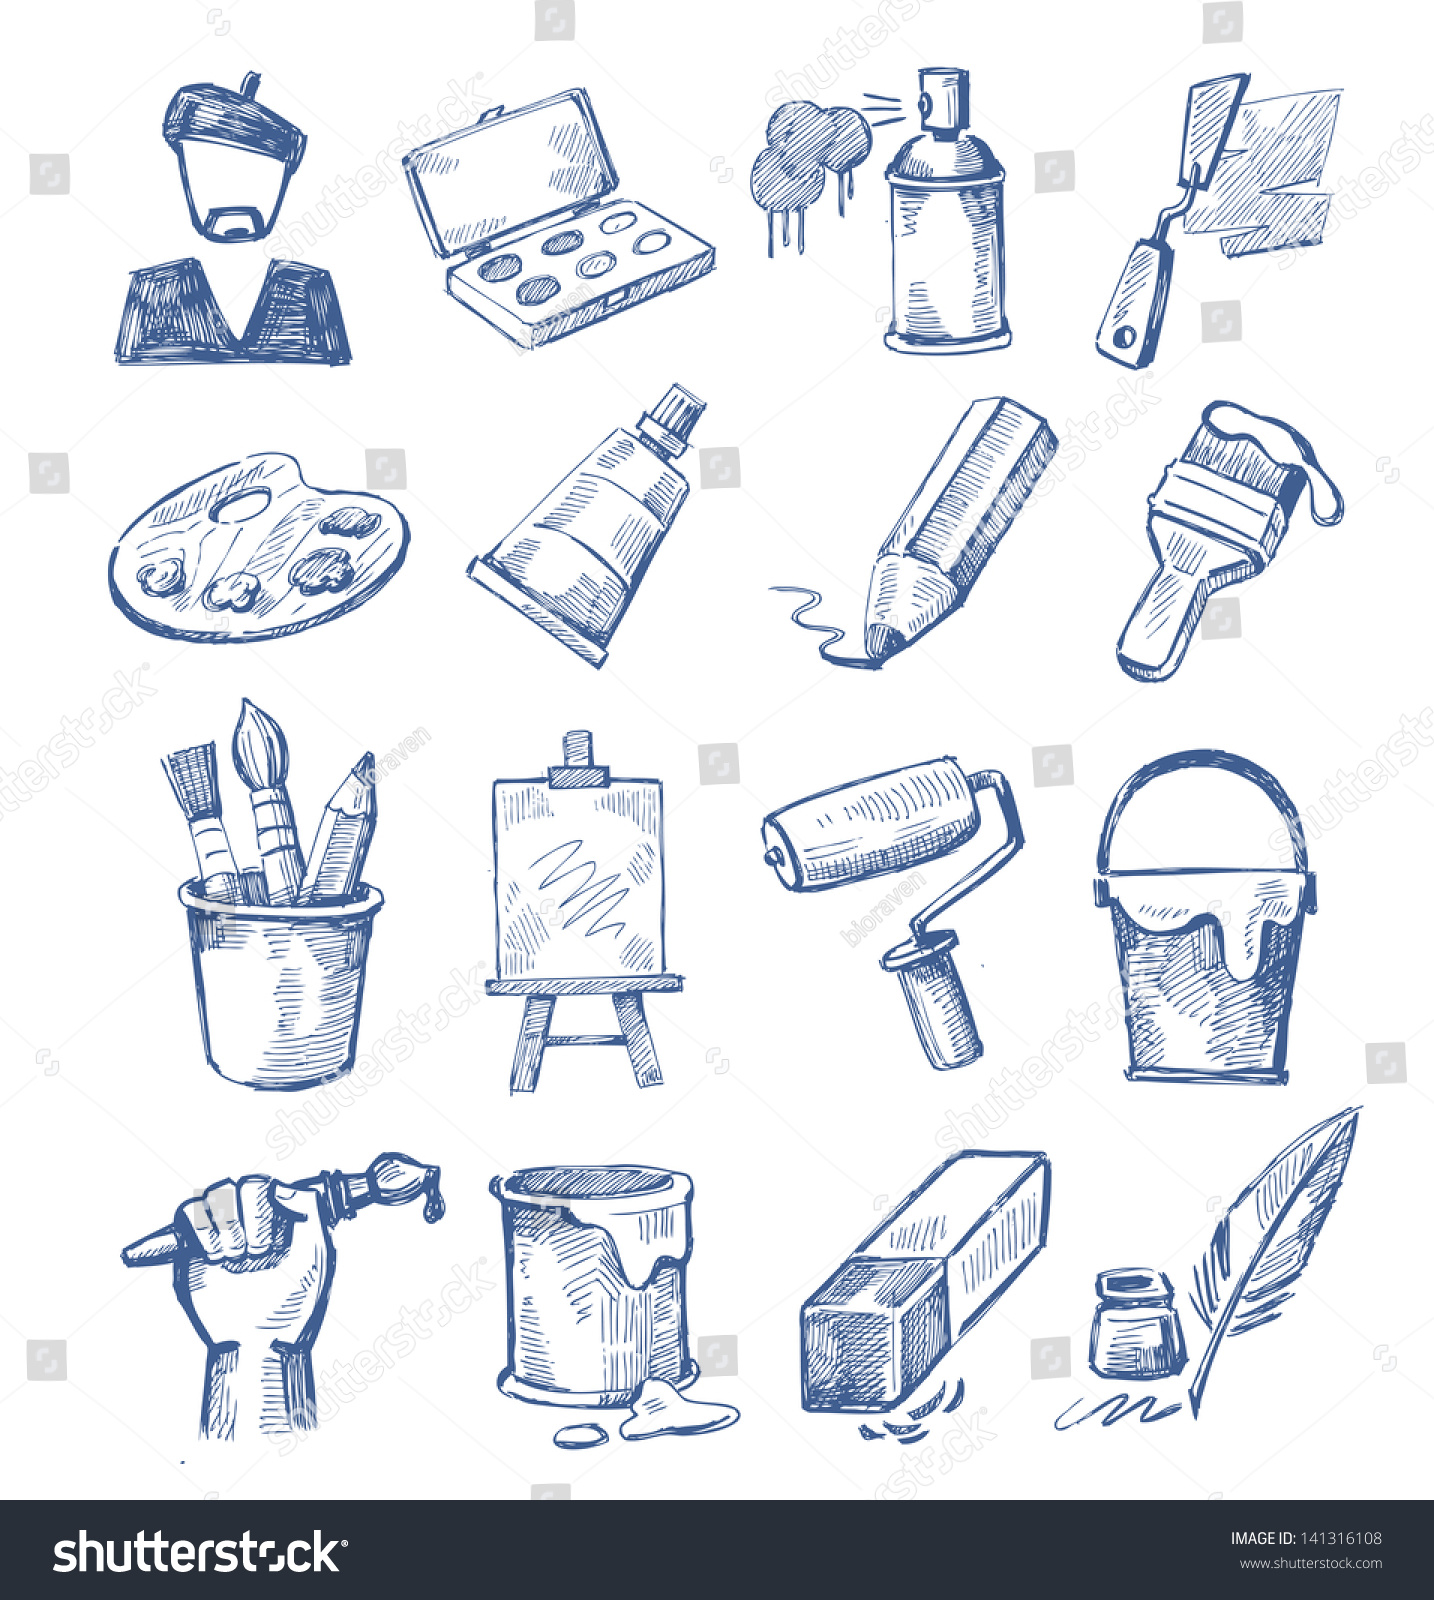 Vector Hand Drawn Art Icons Set On White - 141316108 : Shutterstock